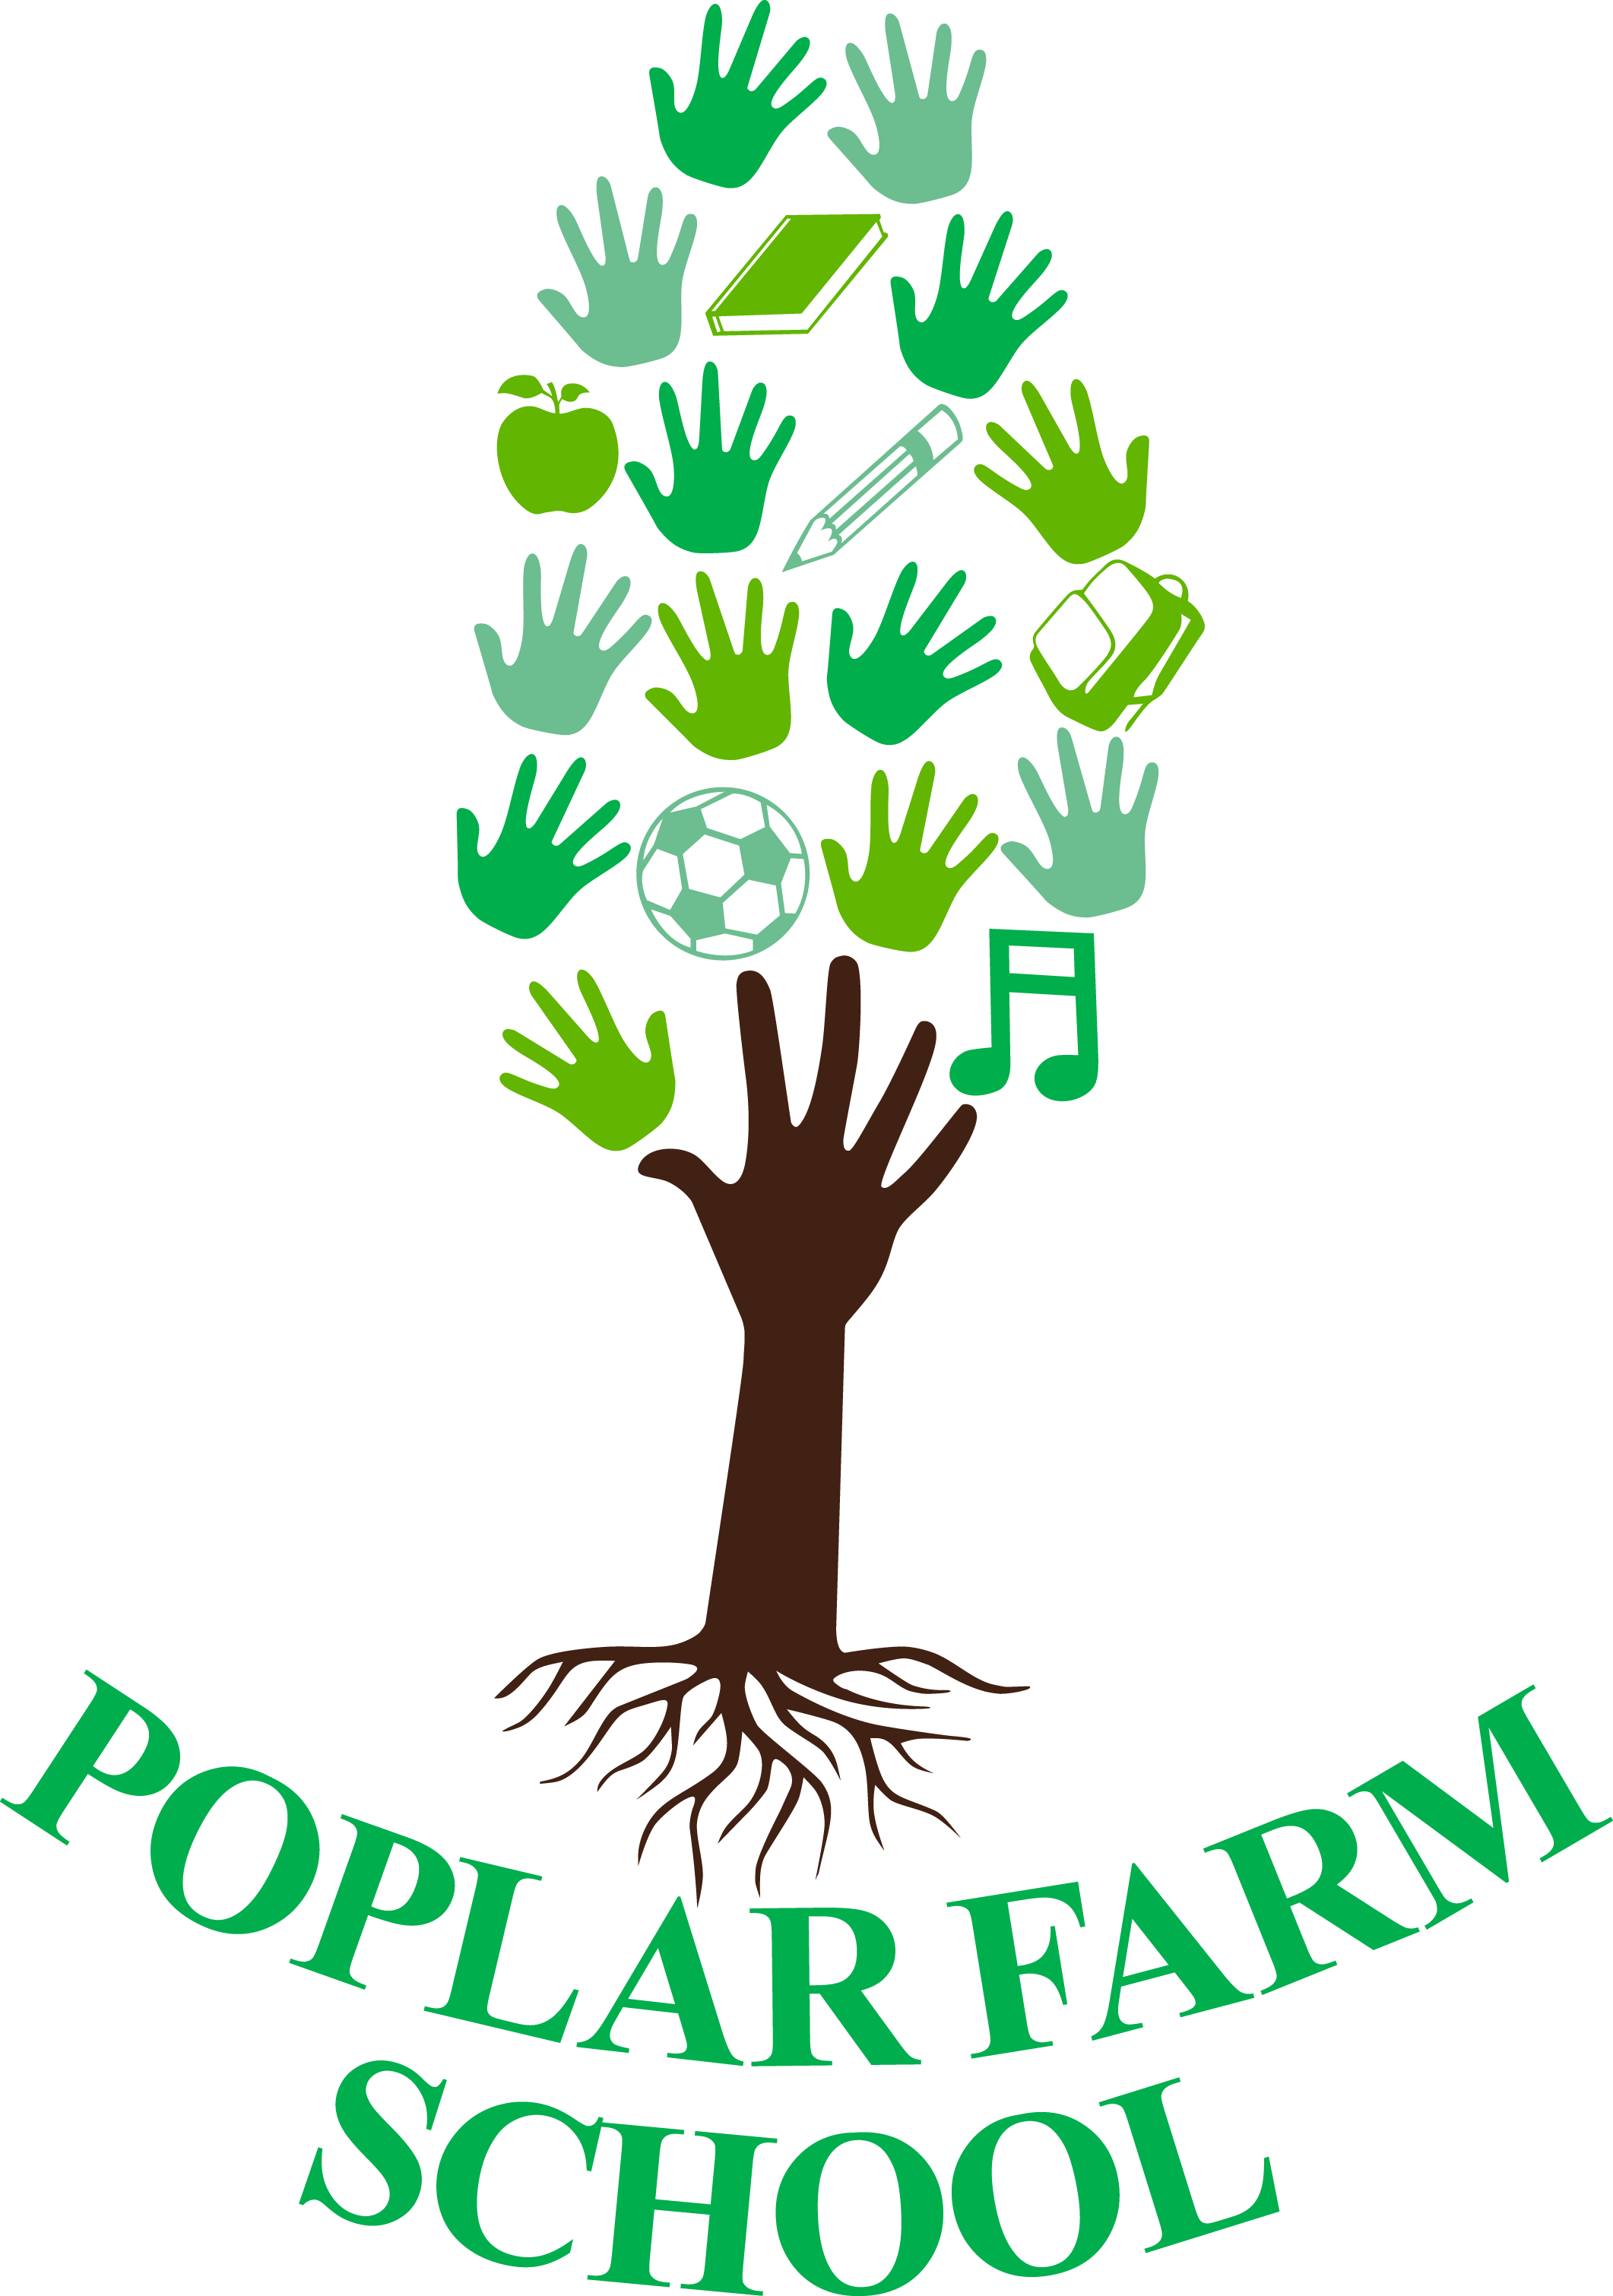 Grantham Poplar Farm Primary School logo 